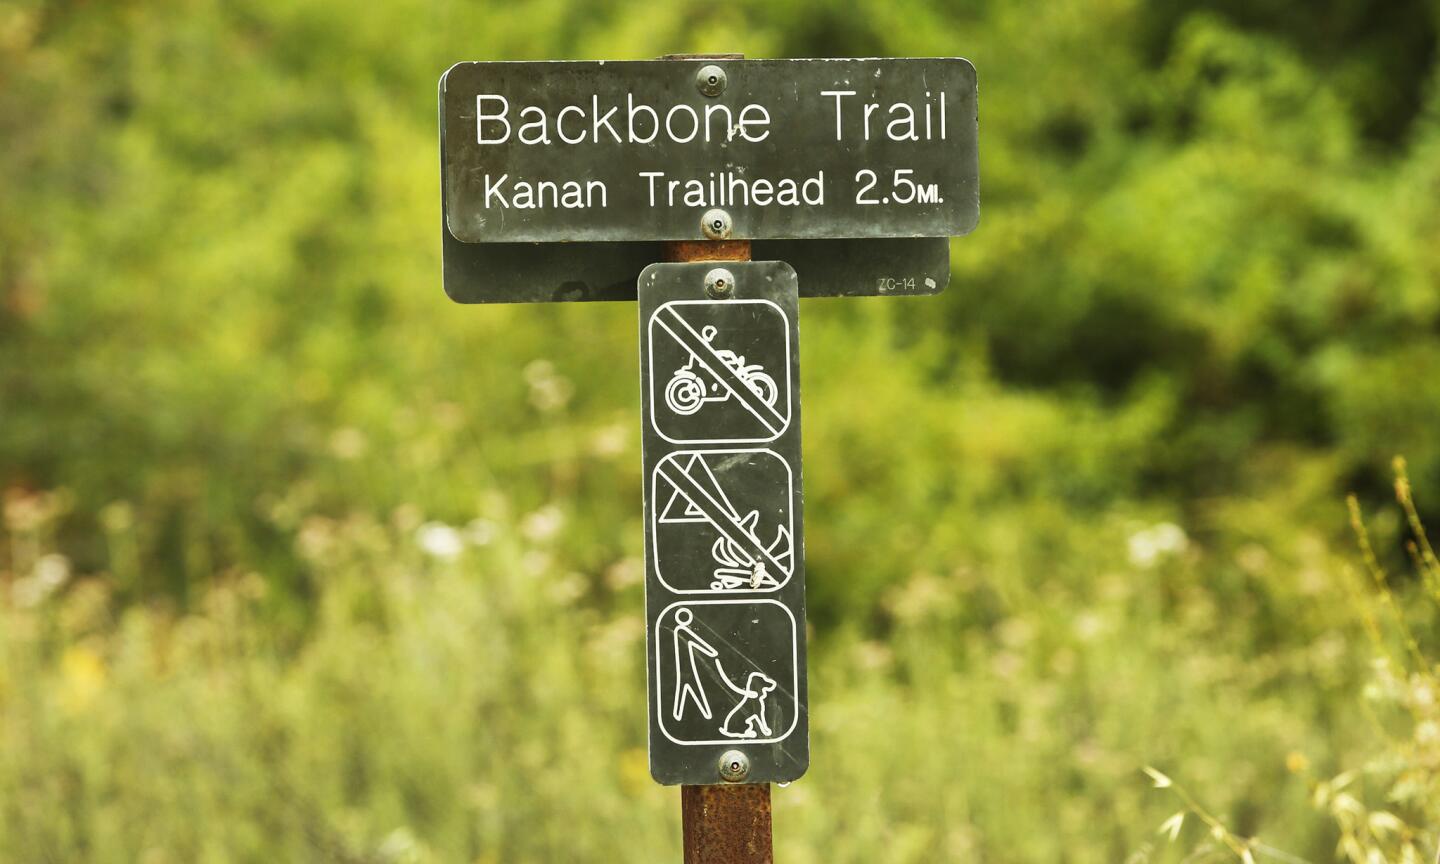 Backbone Trail in Santa Monica Mountains